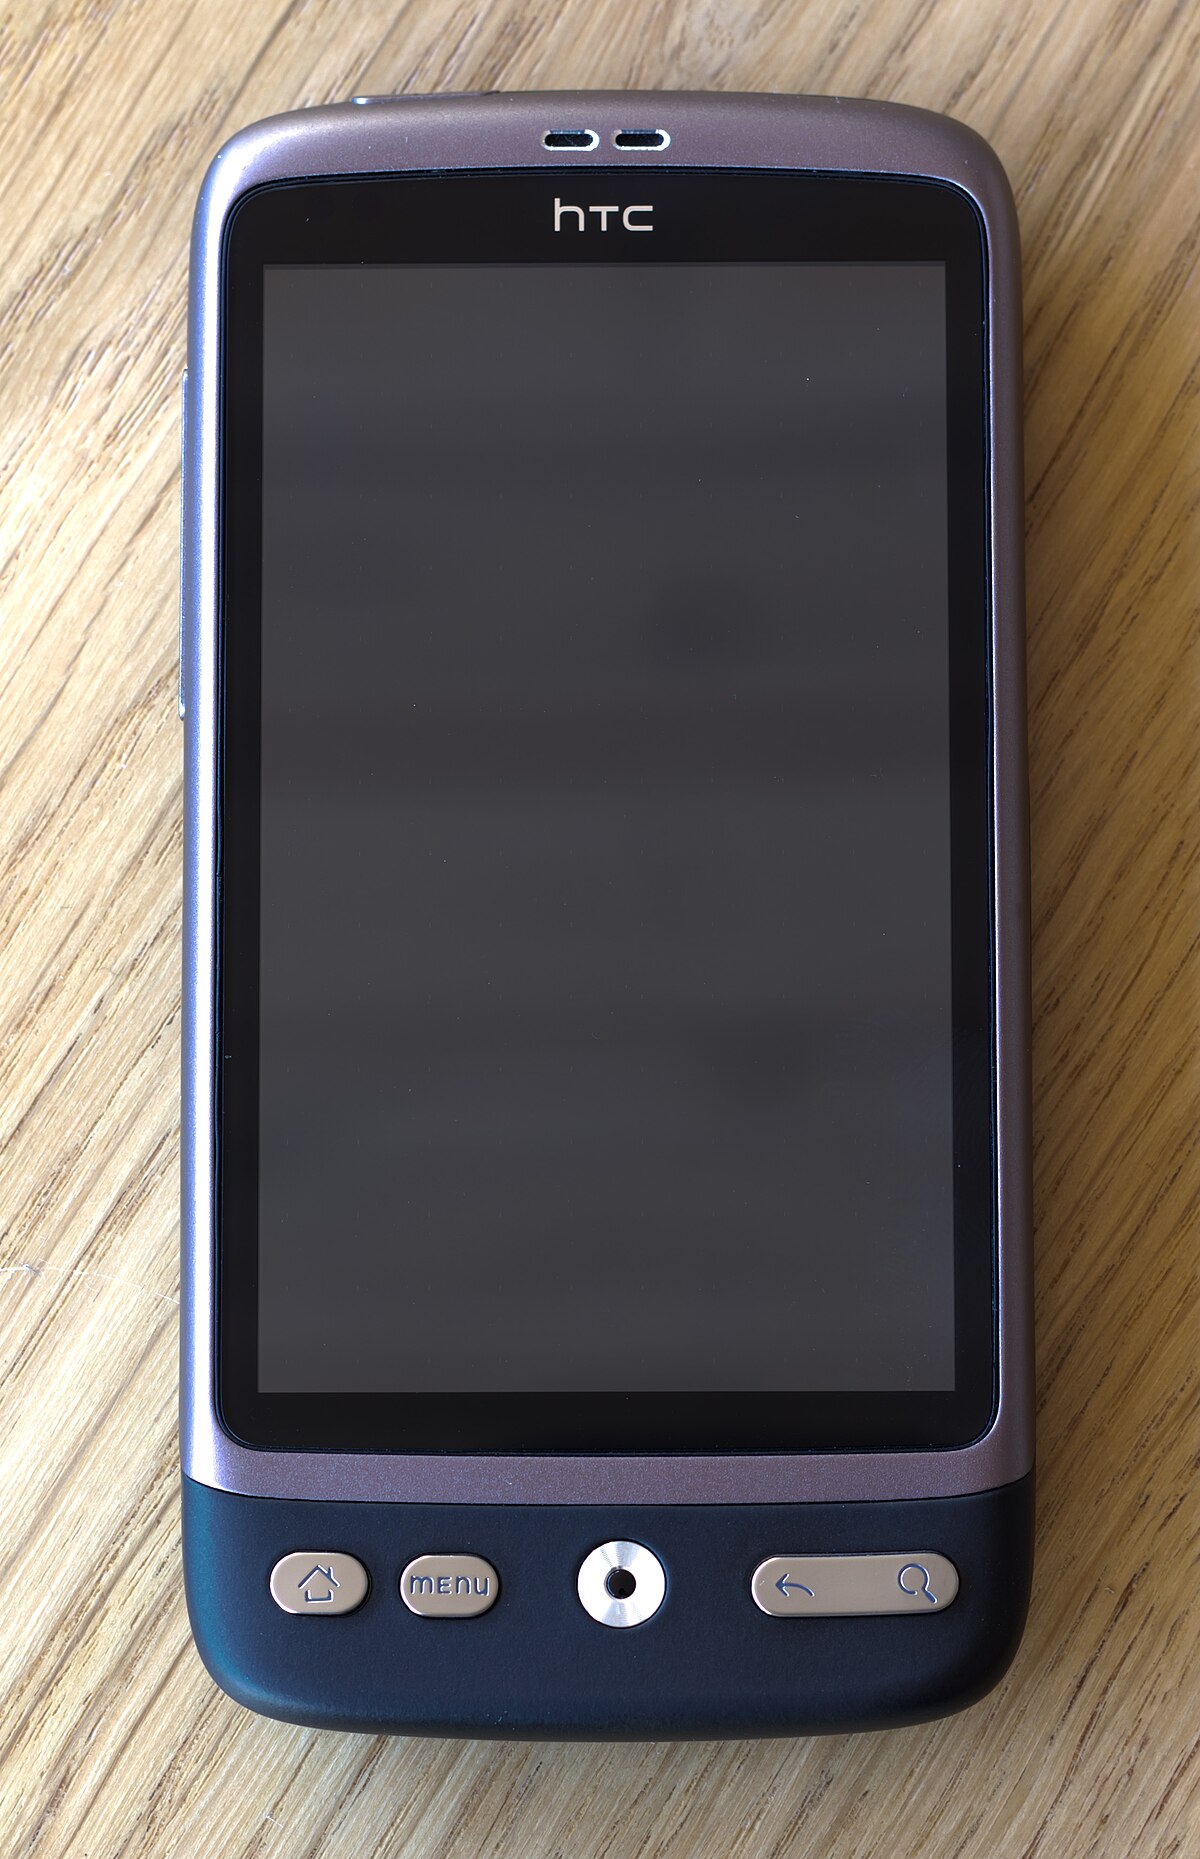 File:HTC Desire - front.jpg - Wikimedia Commons